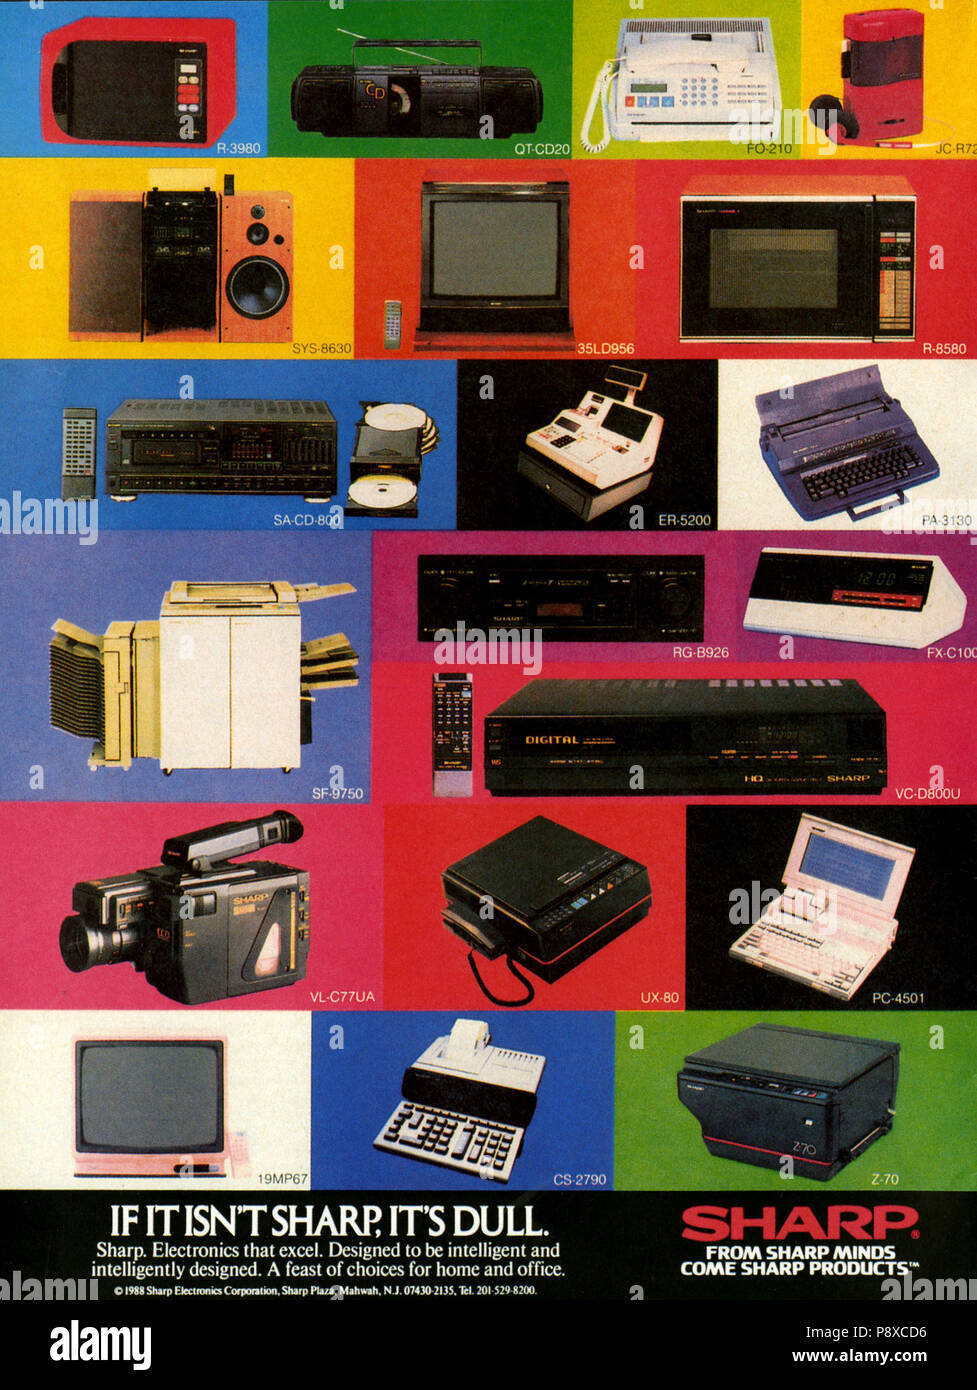 1980s USA Sharp Magazine Advert Stock Photo